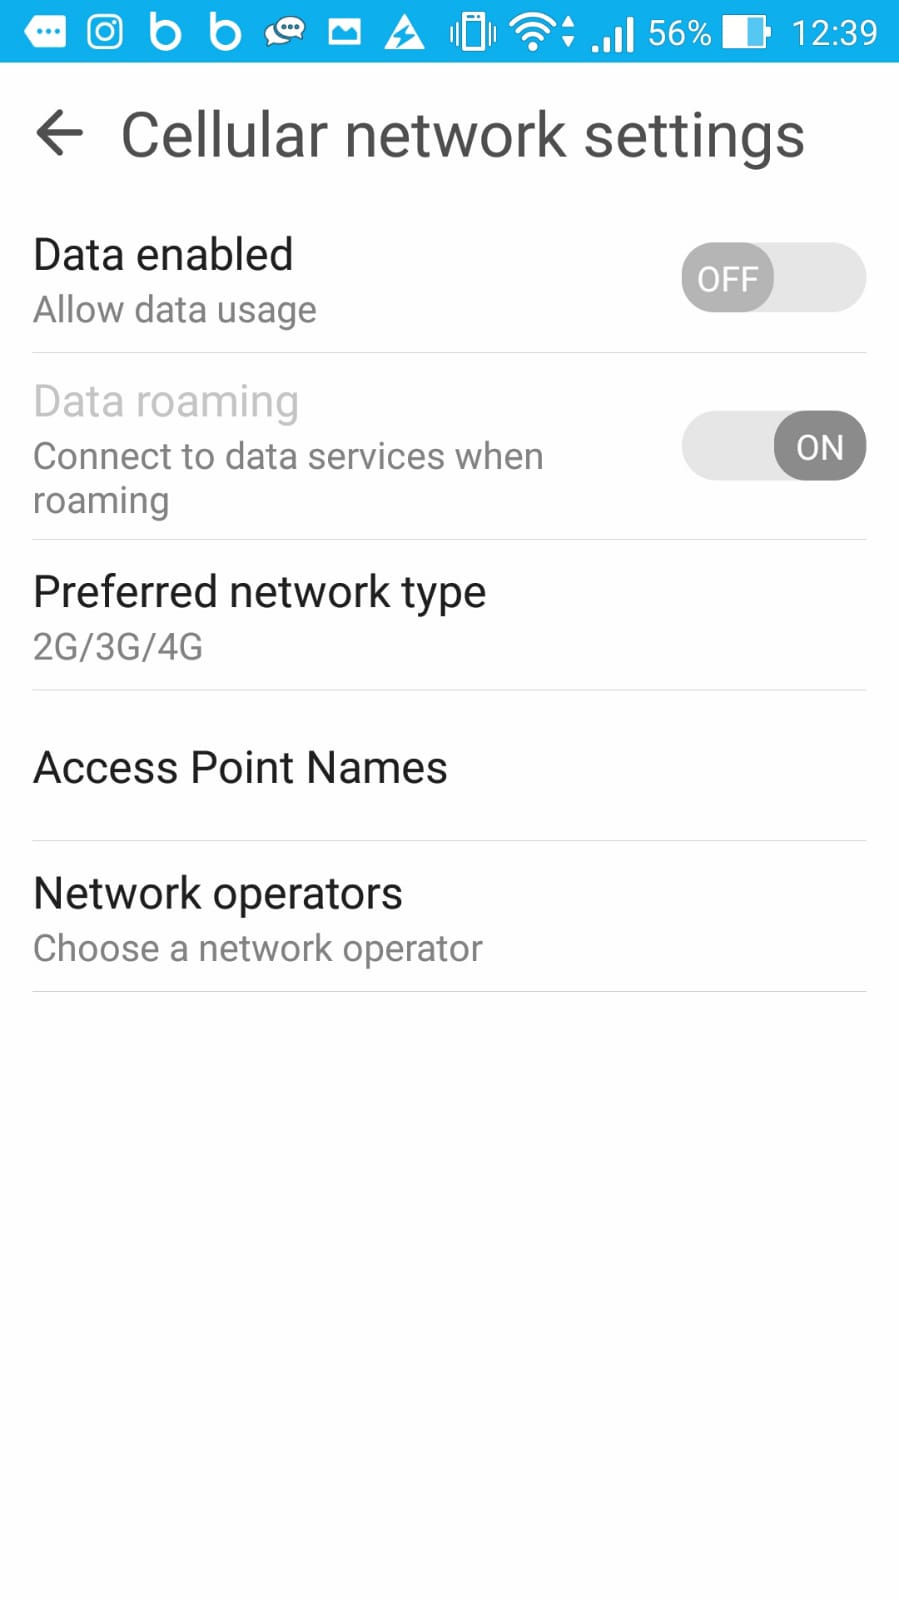 Samsung Galaxy Tab A 10.1 (2016) WiFi가 연결되었지만 인터넷이 없음